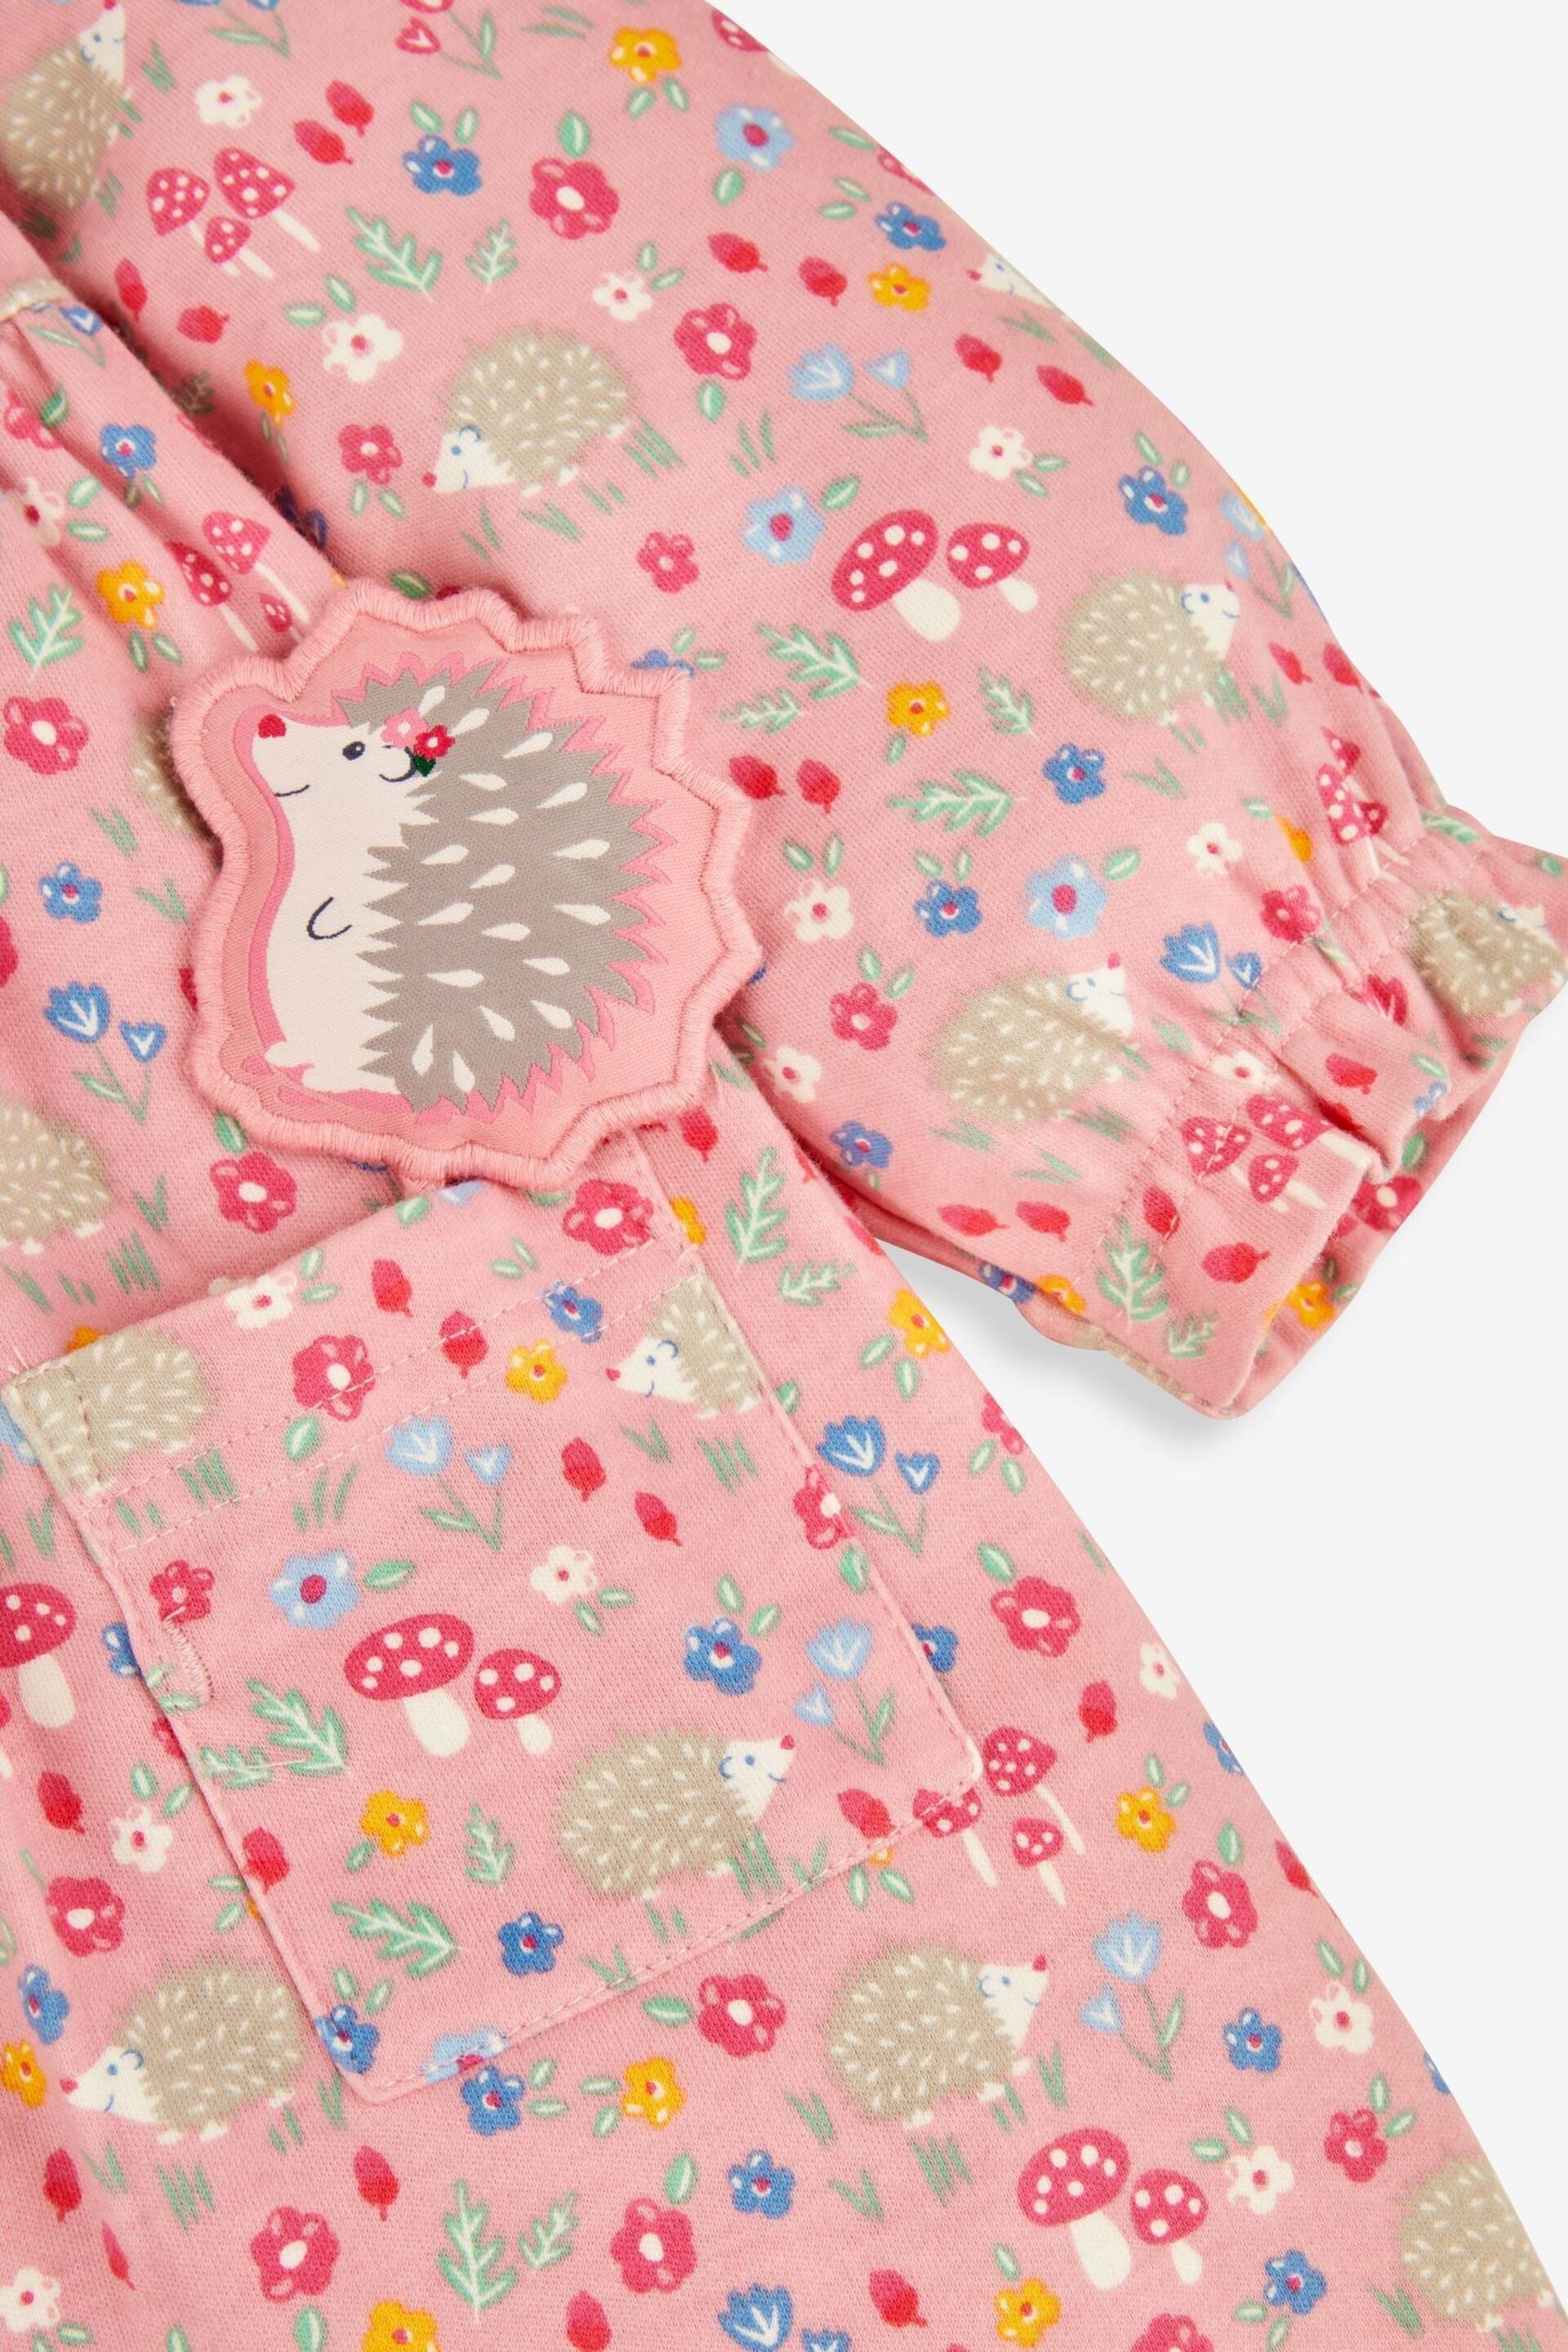 JoJo Maman Bébé Pink Hedgehog Floral Button Front Dress - Image 4 of 4